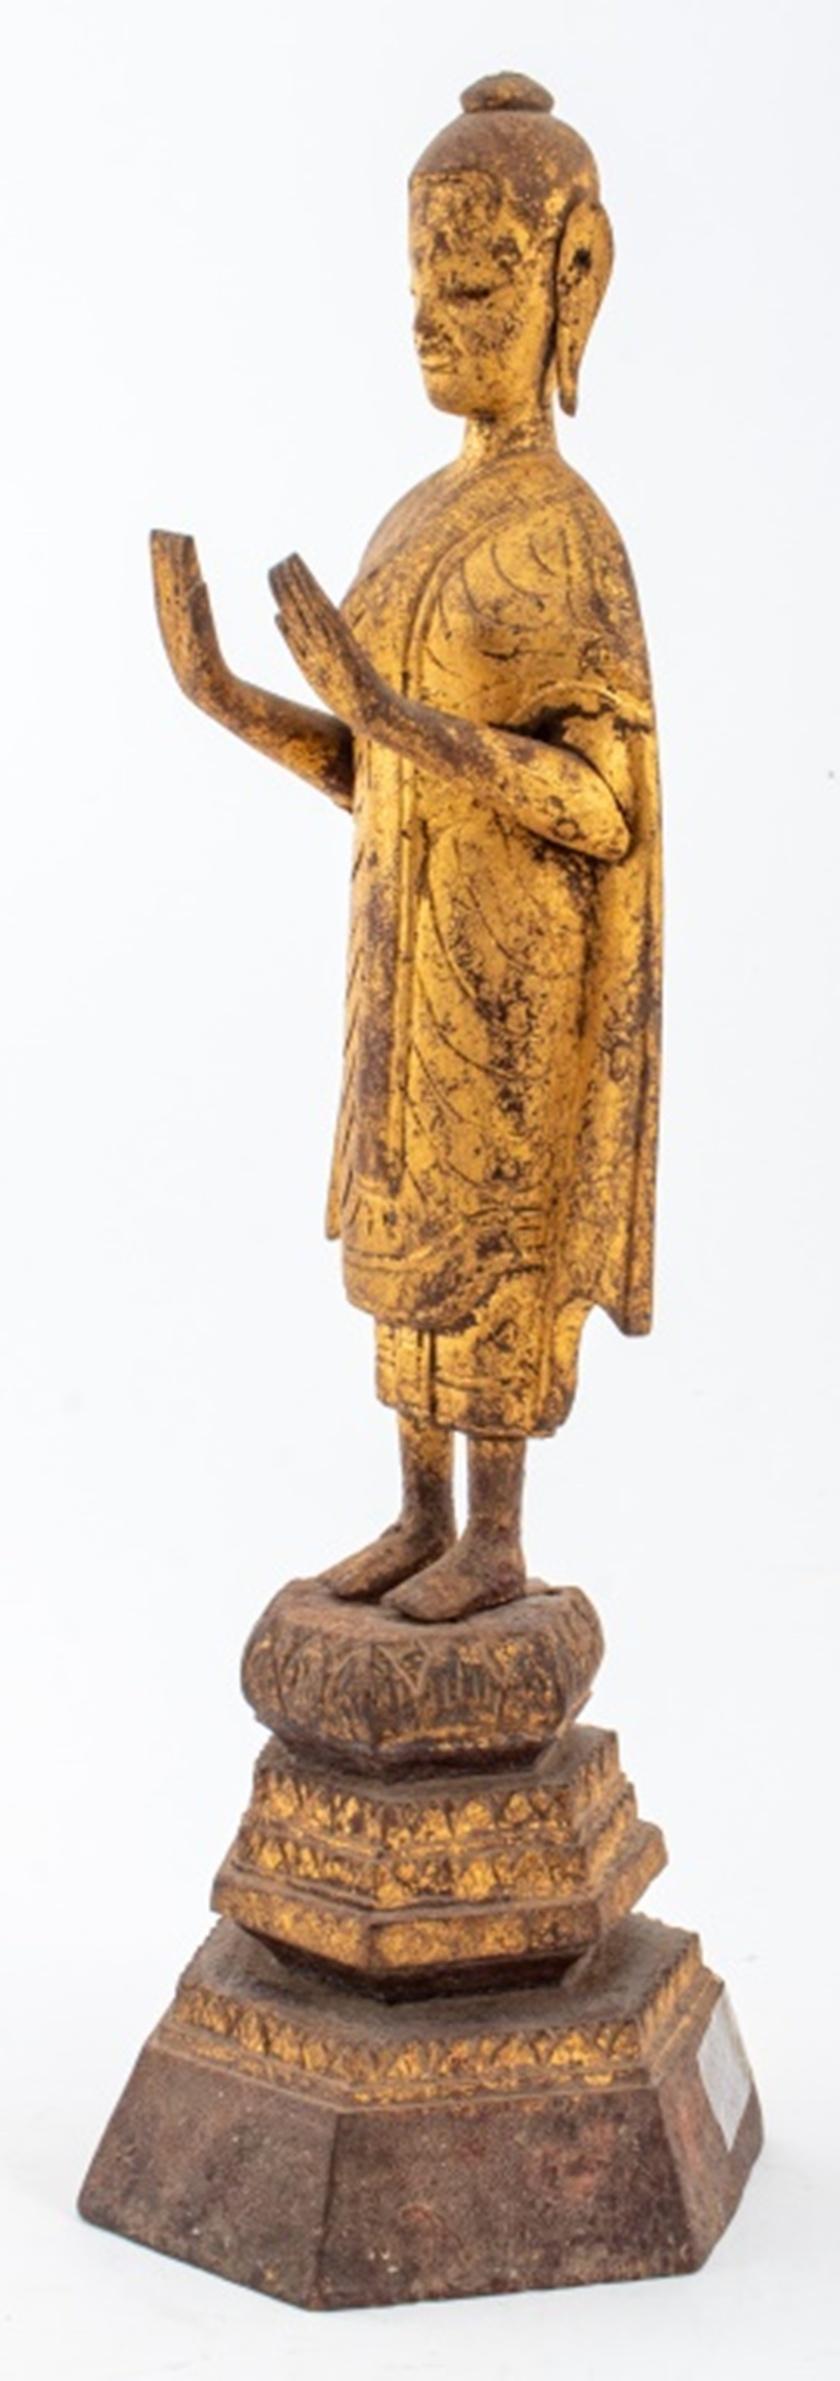 Hand-Carved Antique Southeast Asian Gilt Wood Buddha Sculpture